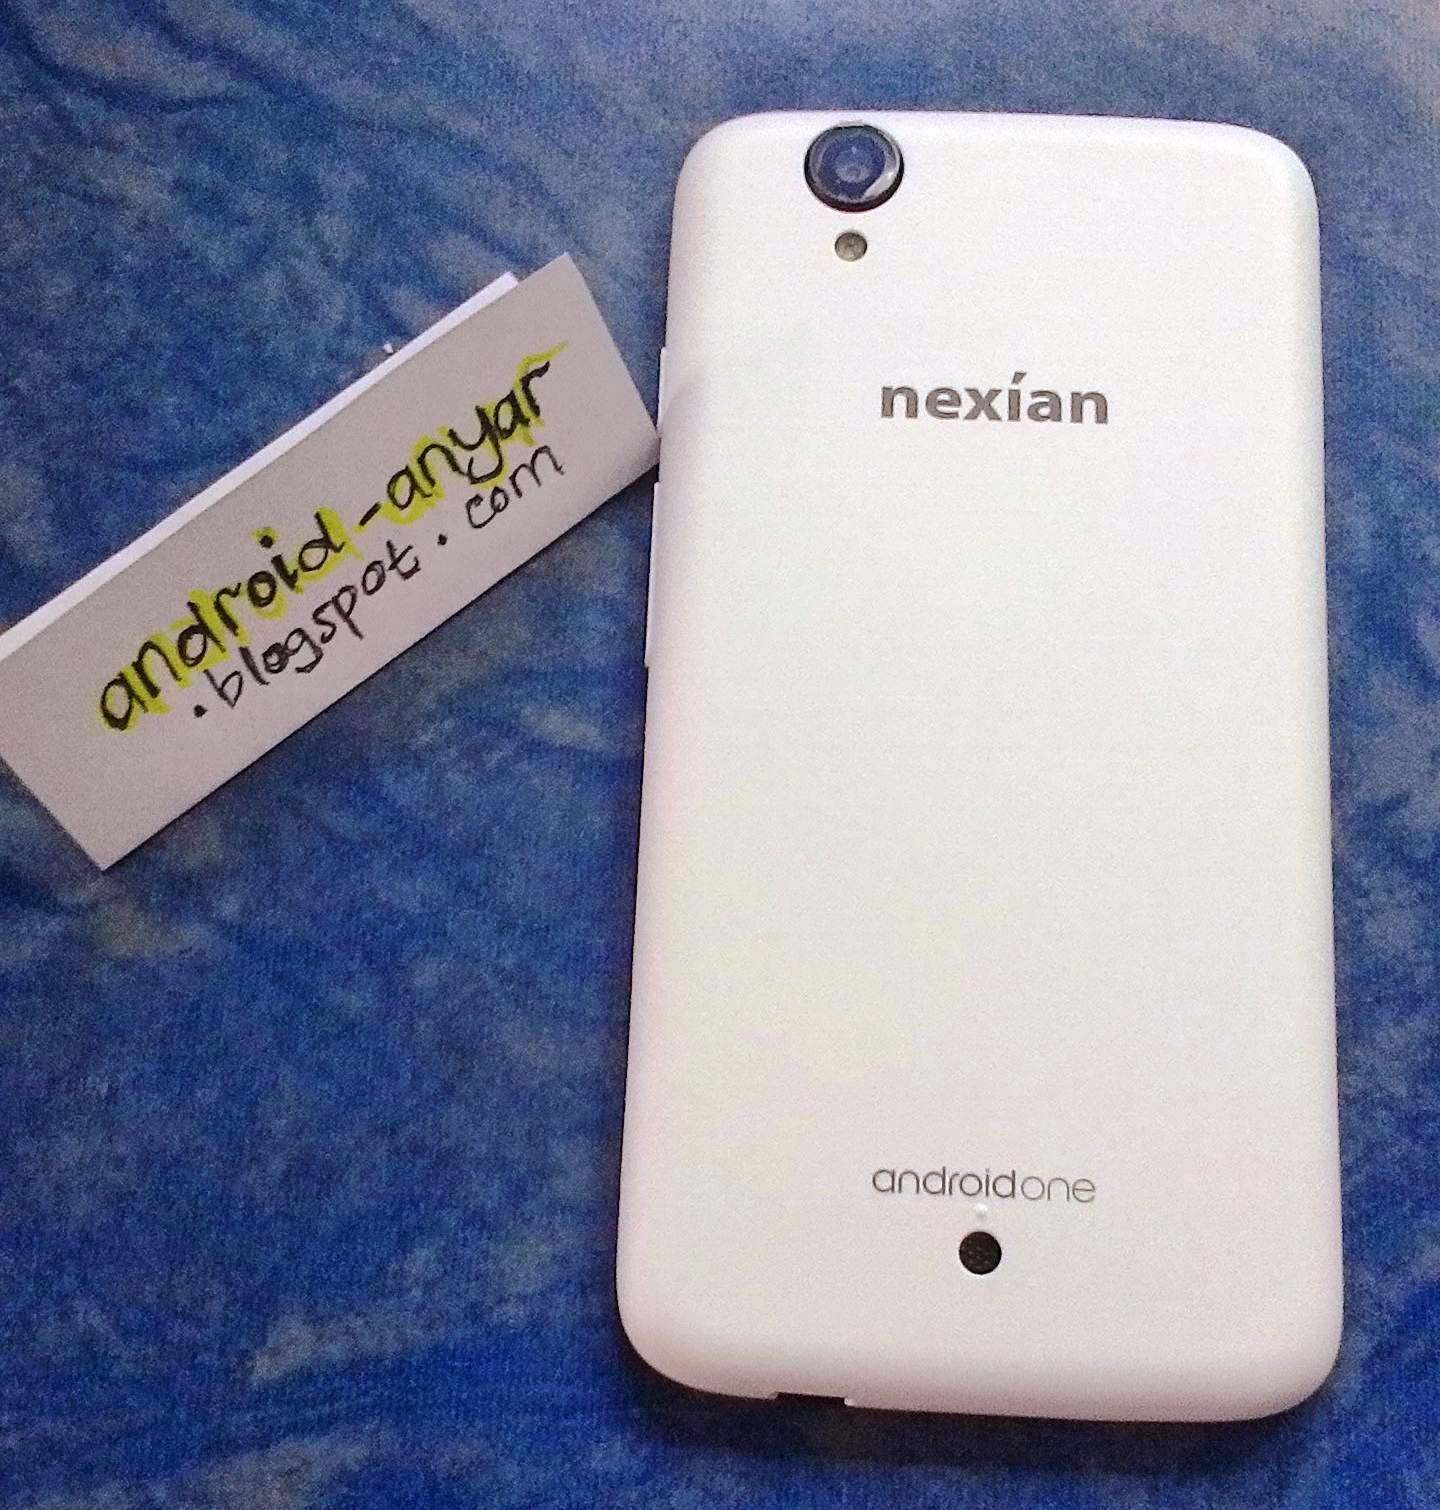 Casing belakang Nexian Journey 1 Android One